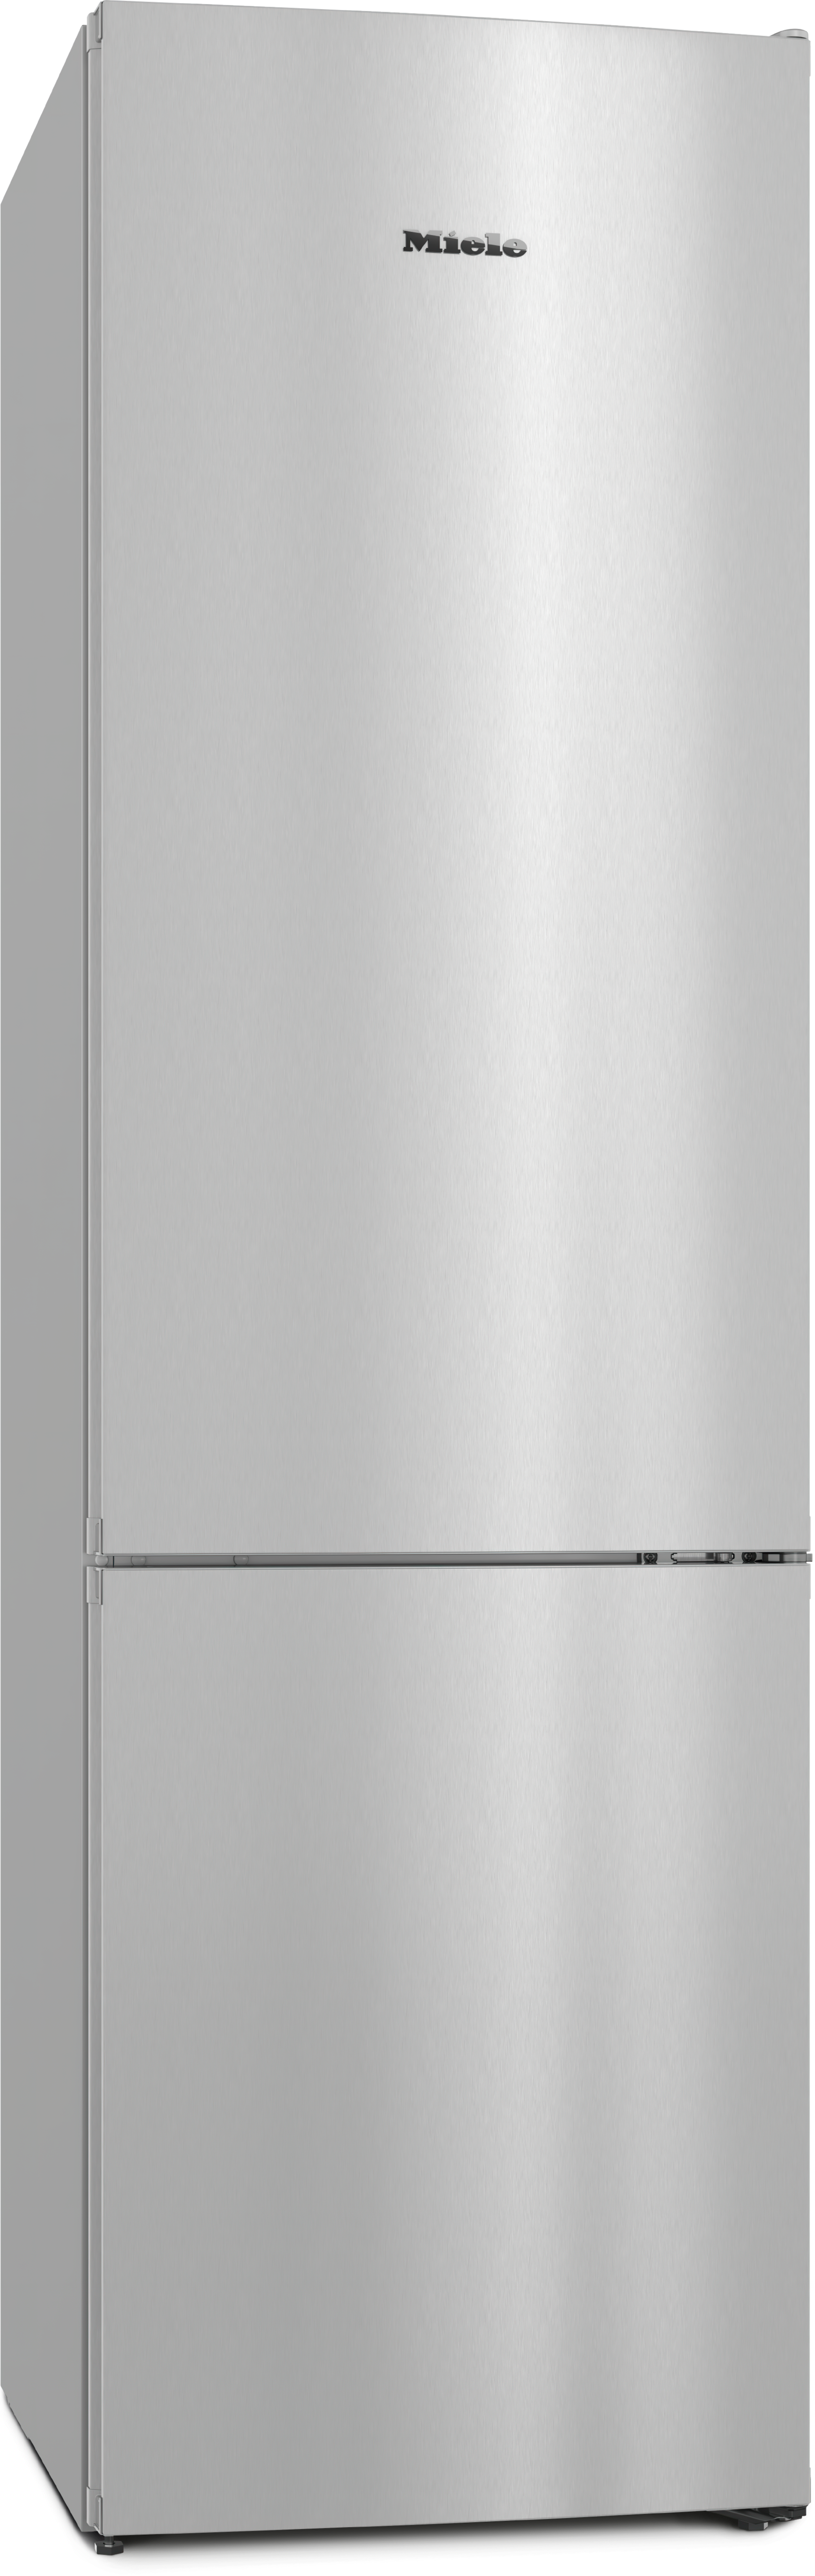 Réfrigérateurs/congélateurs - KFN 4394 ED Aspect acier inoxydable - 1